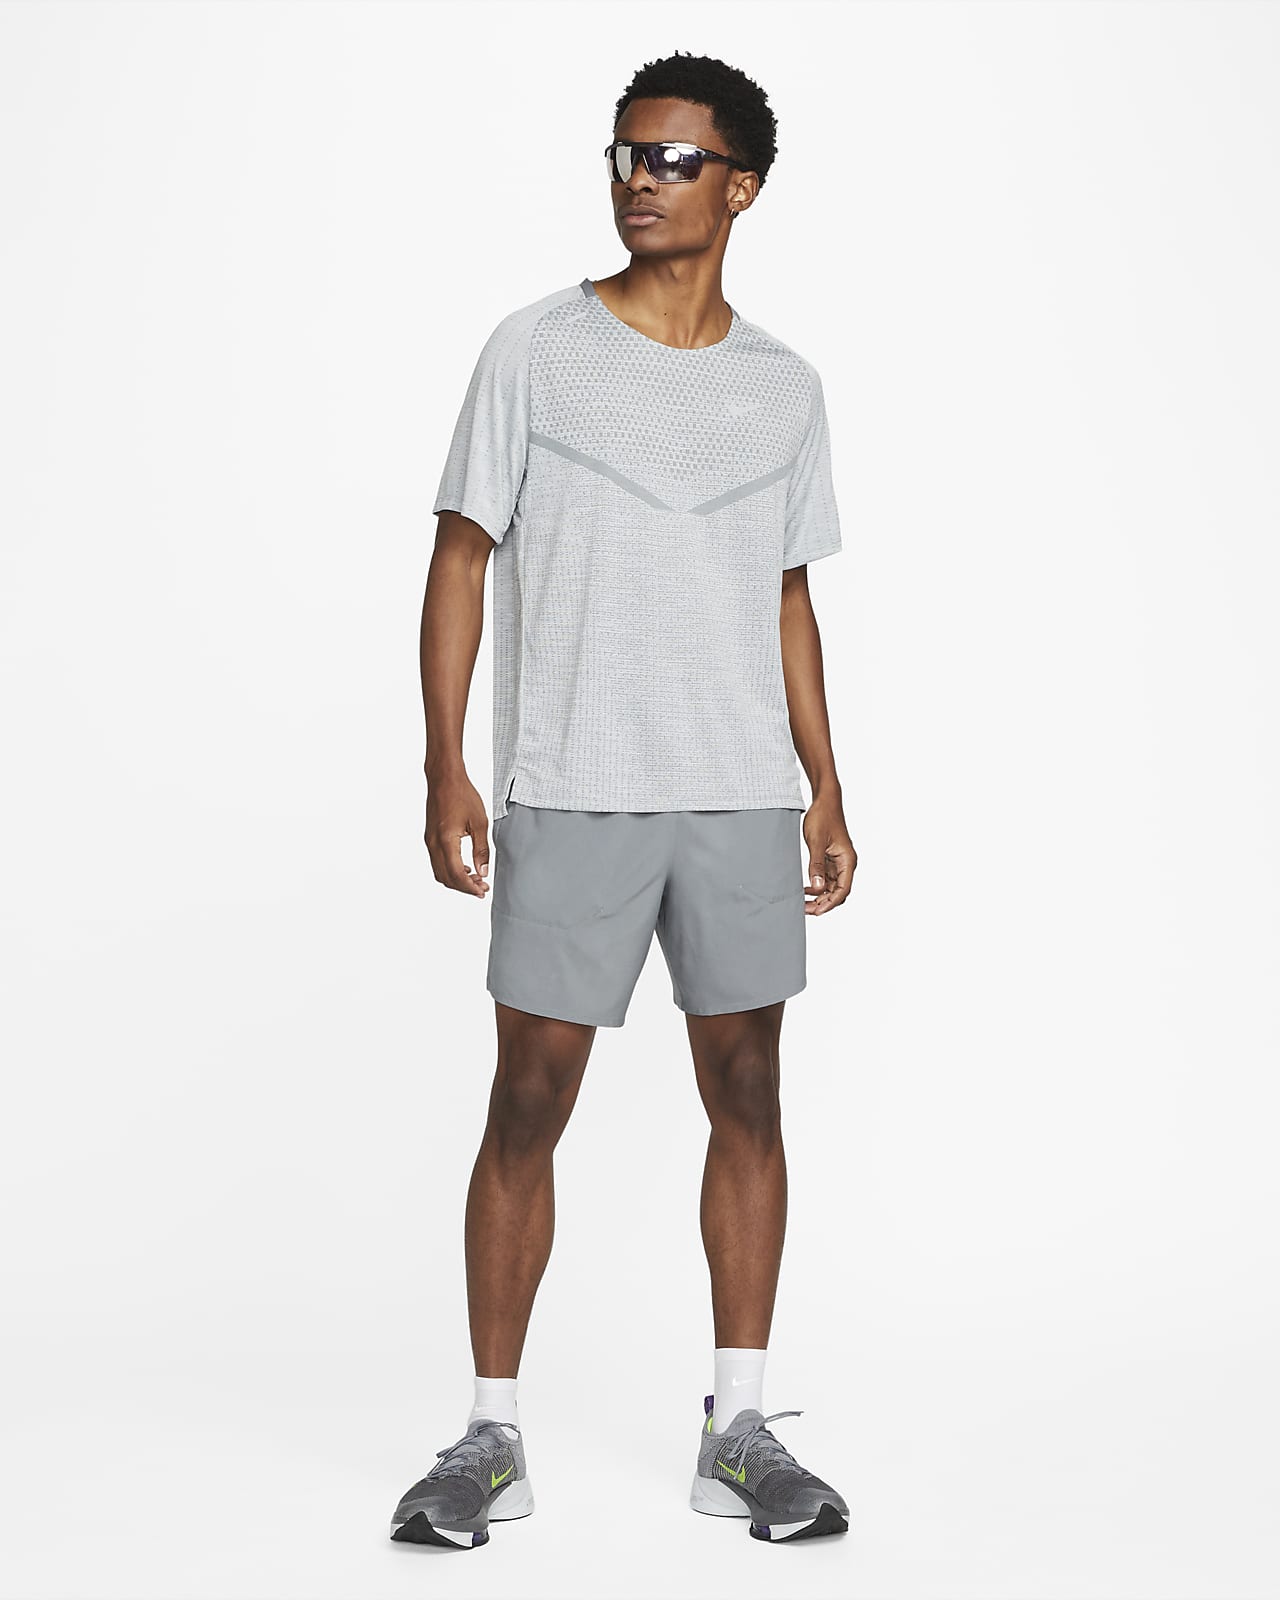 Nike Dri-FIT ADV TechKnit Ultra Men's Short-Sleeve Running Top. Nike NL